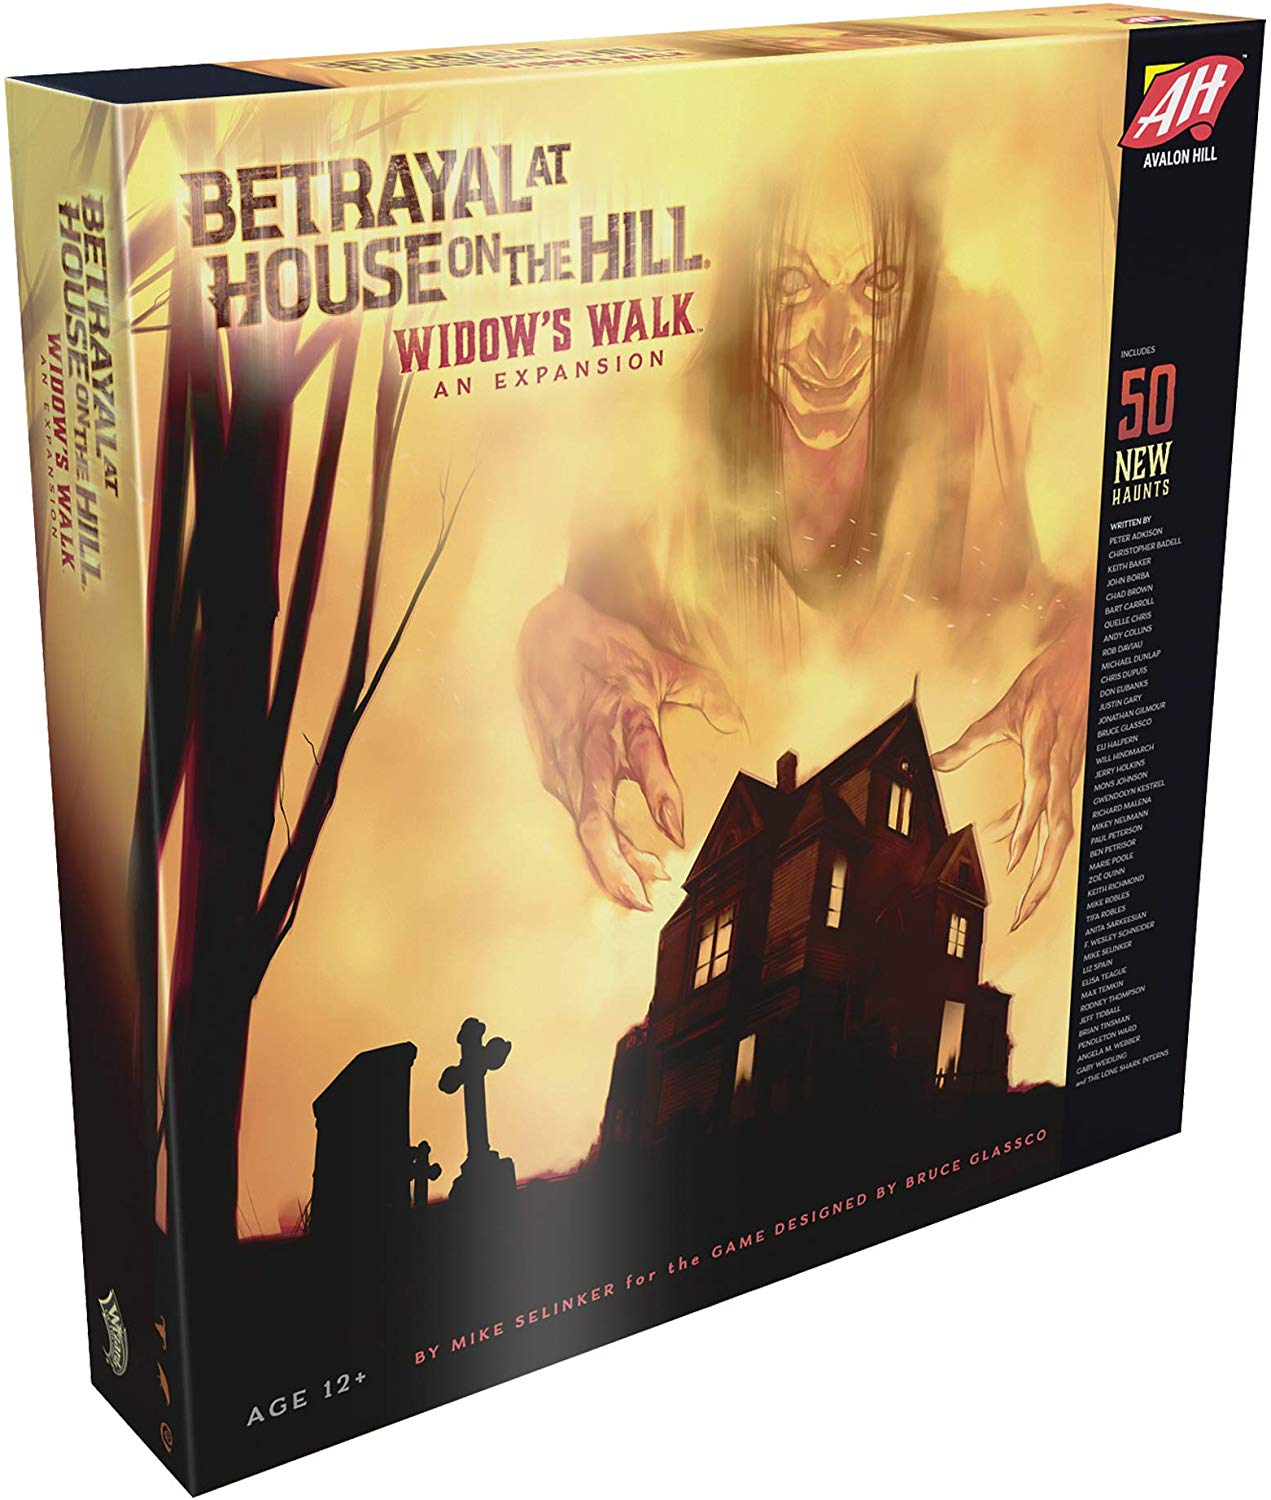 Betrayal Widows Walk | North Game Den